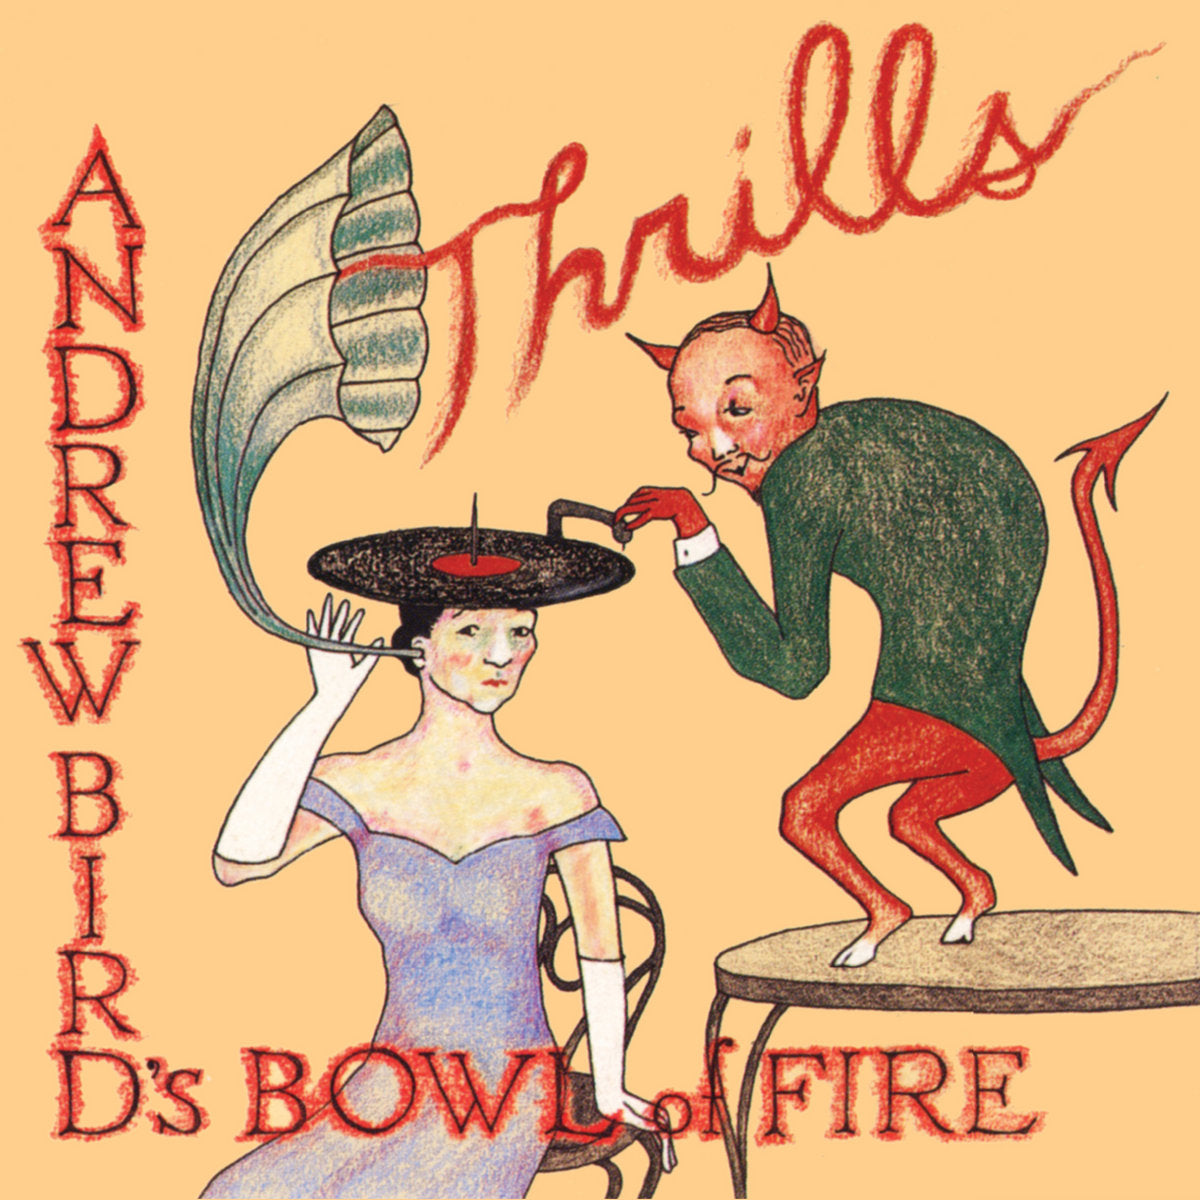 Andrew Bird's Bowl of Fire: Thrills Vinyl LP